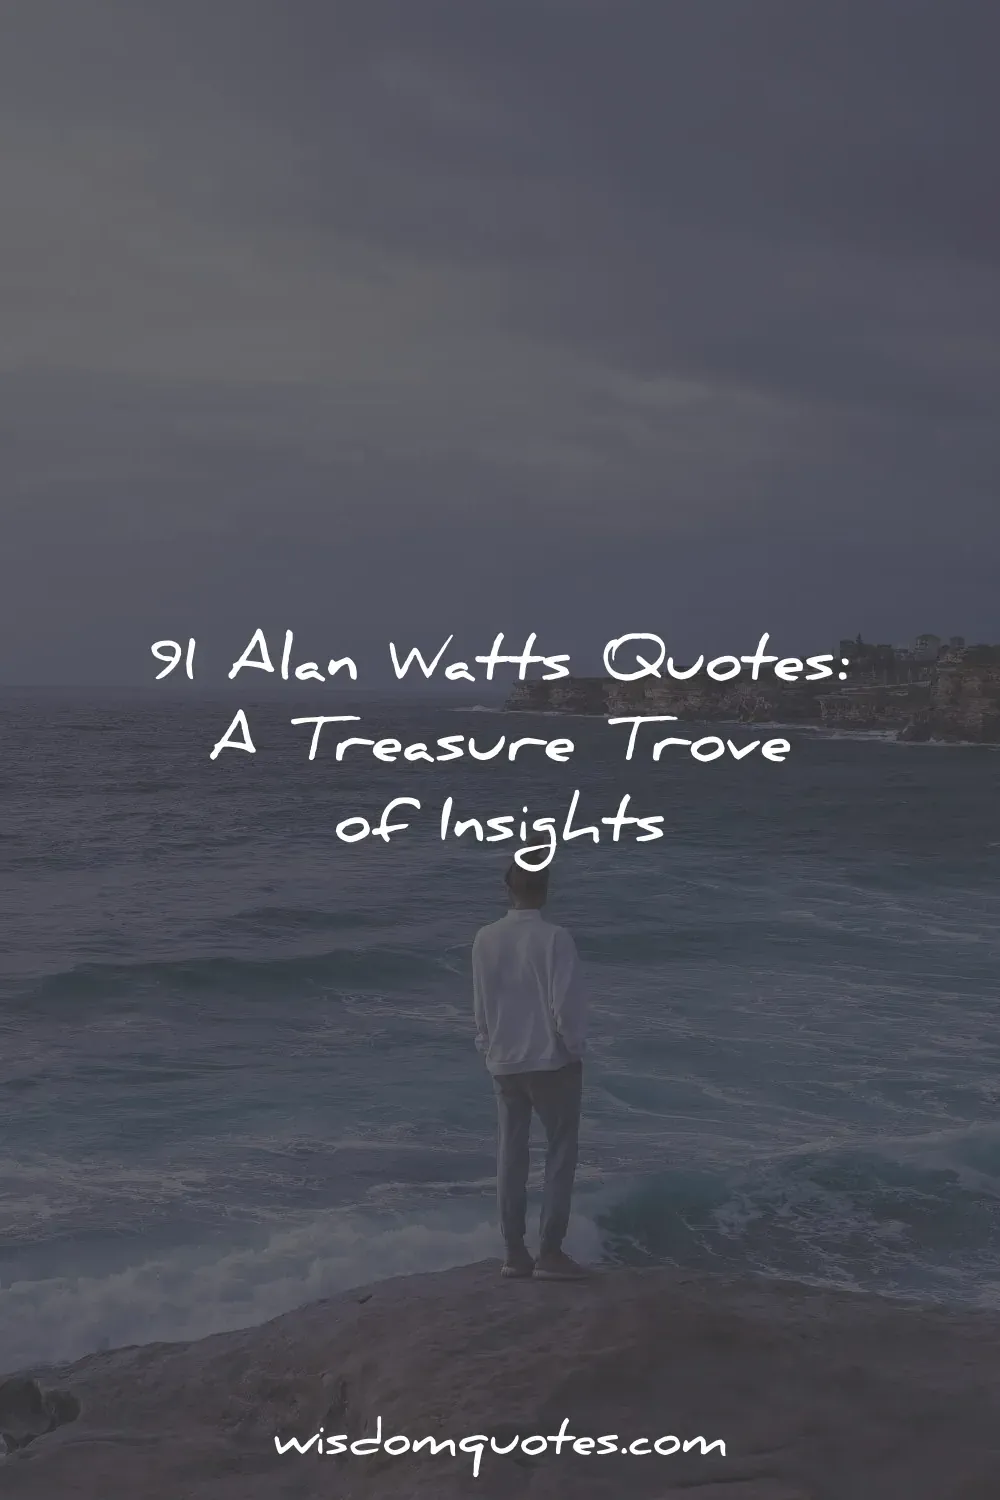 alan watts quotes treasure trove of insights pinterest wisdom